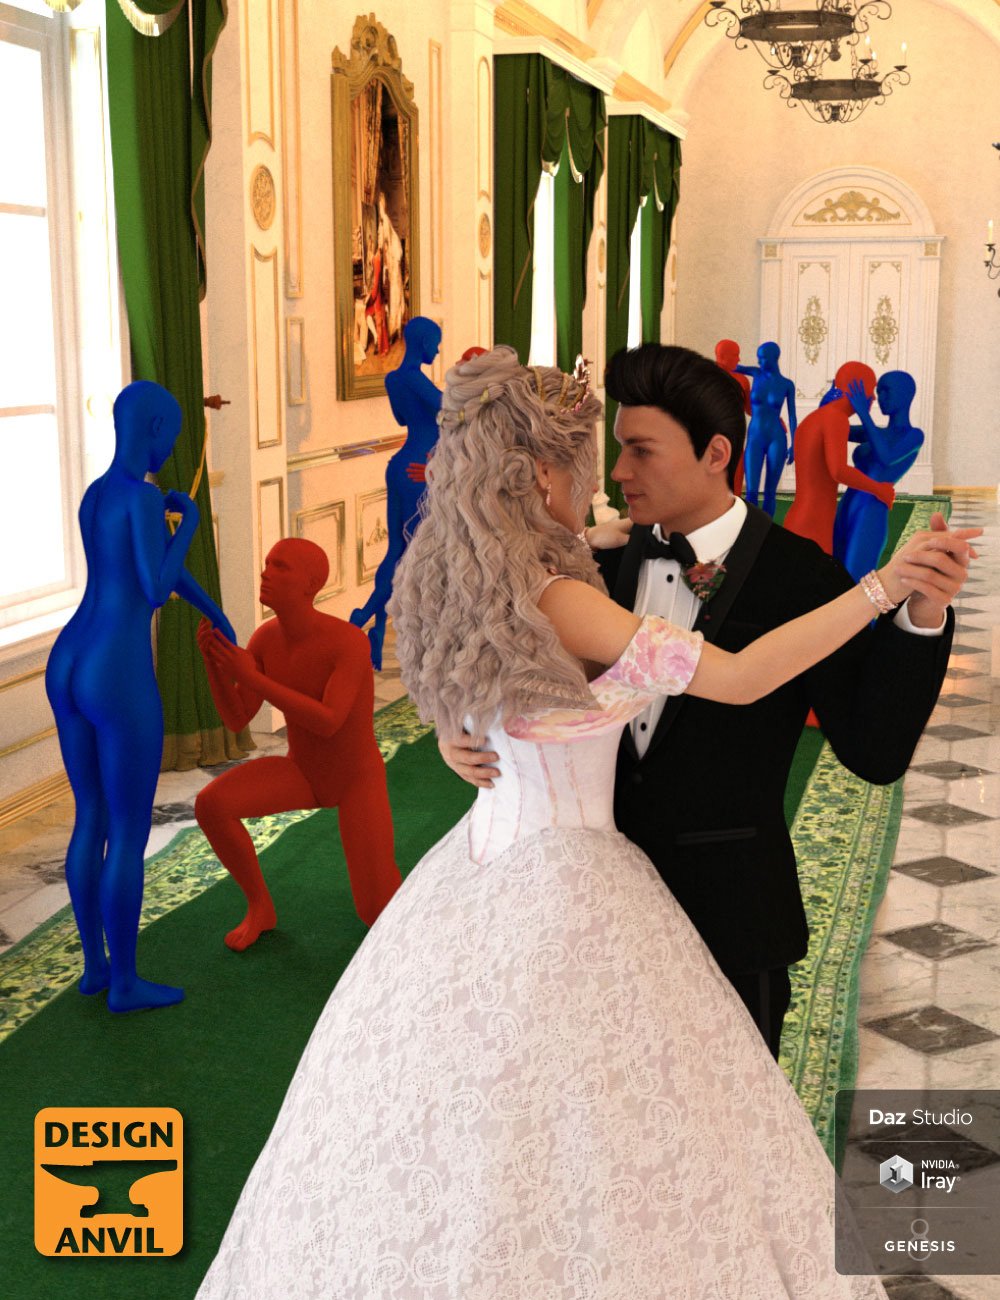 DA Couple Poses for Genesis 8 by: Design Anvil, 3D Models by Daz 3D